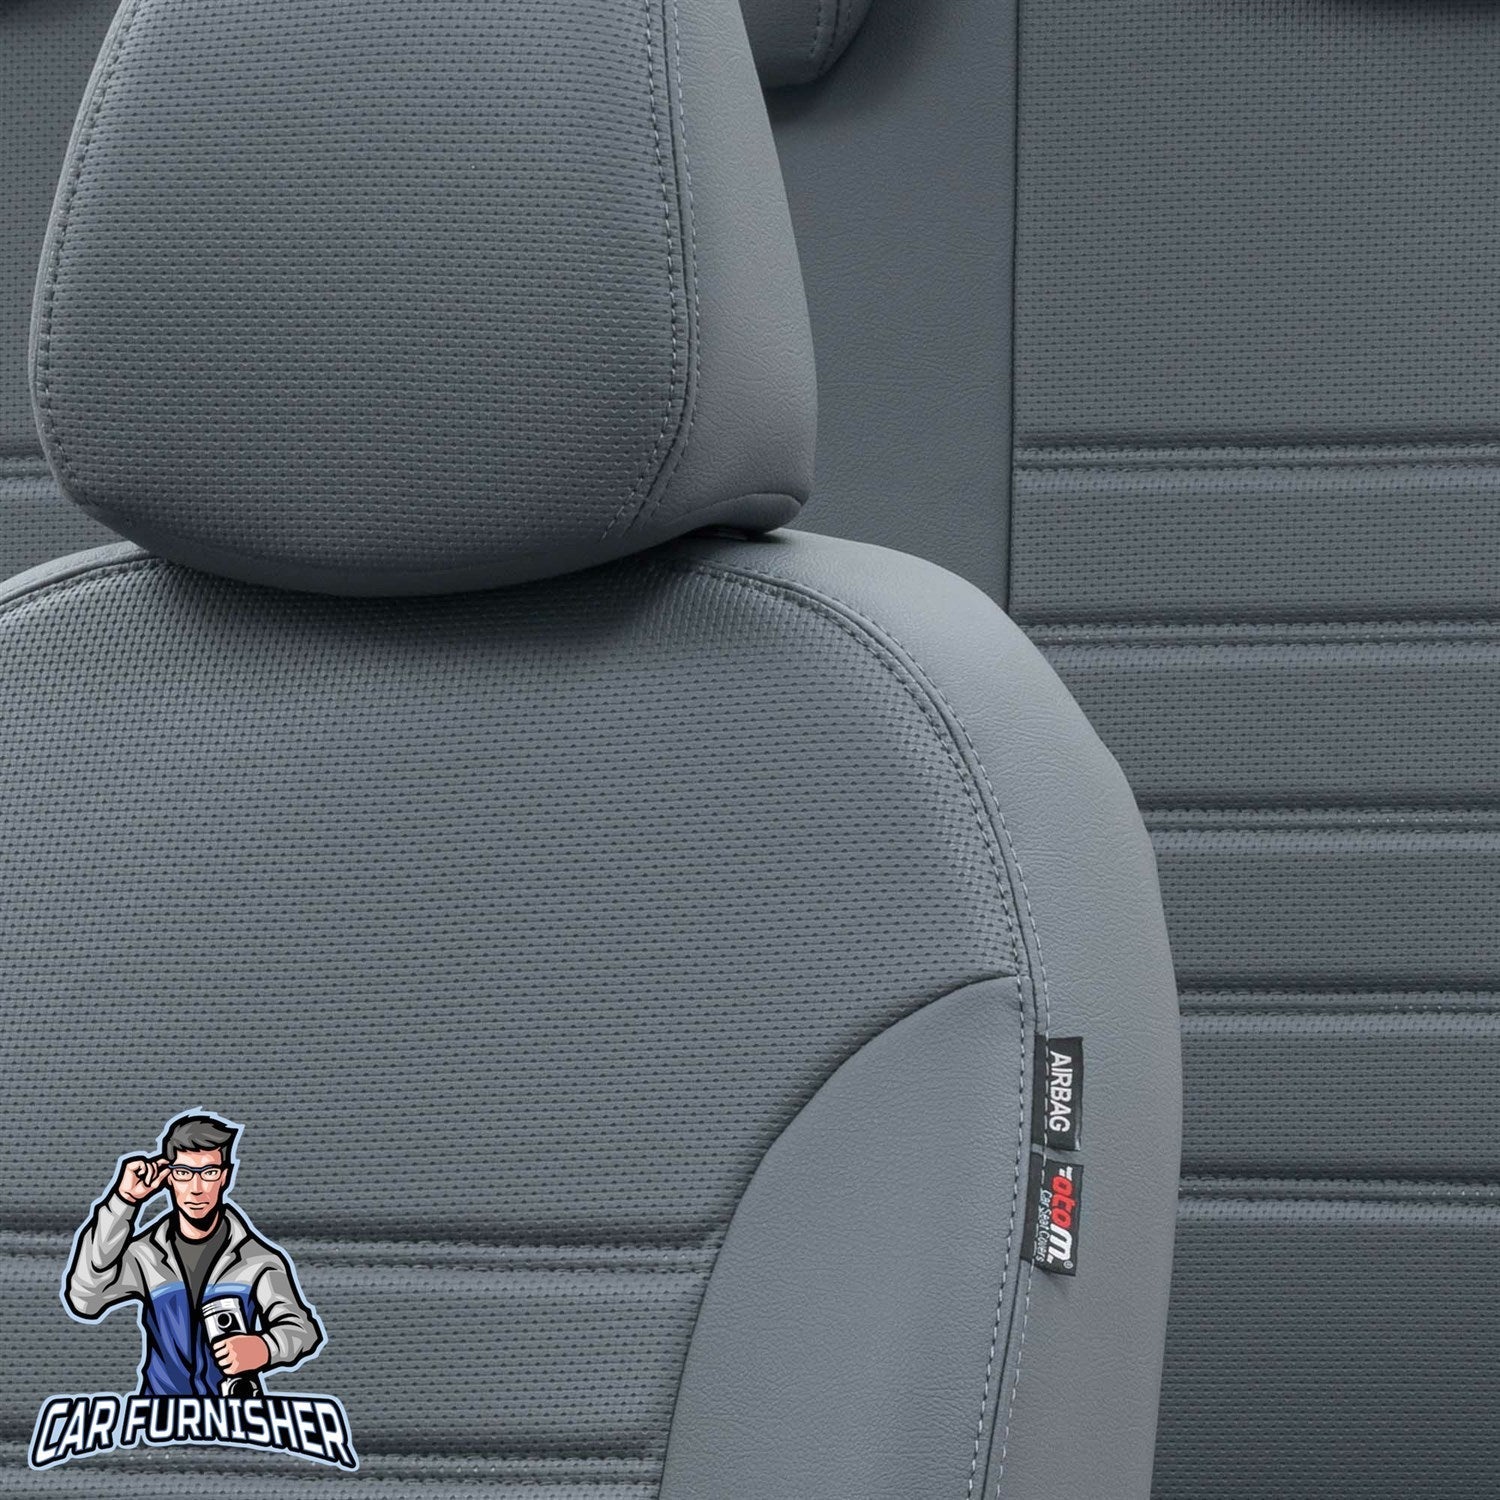 Isuzu Champion Seat Cover New York Leather Design Smoked Leather